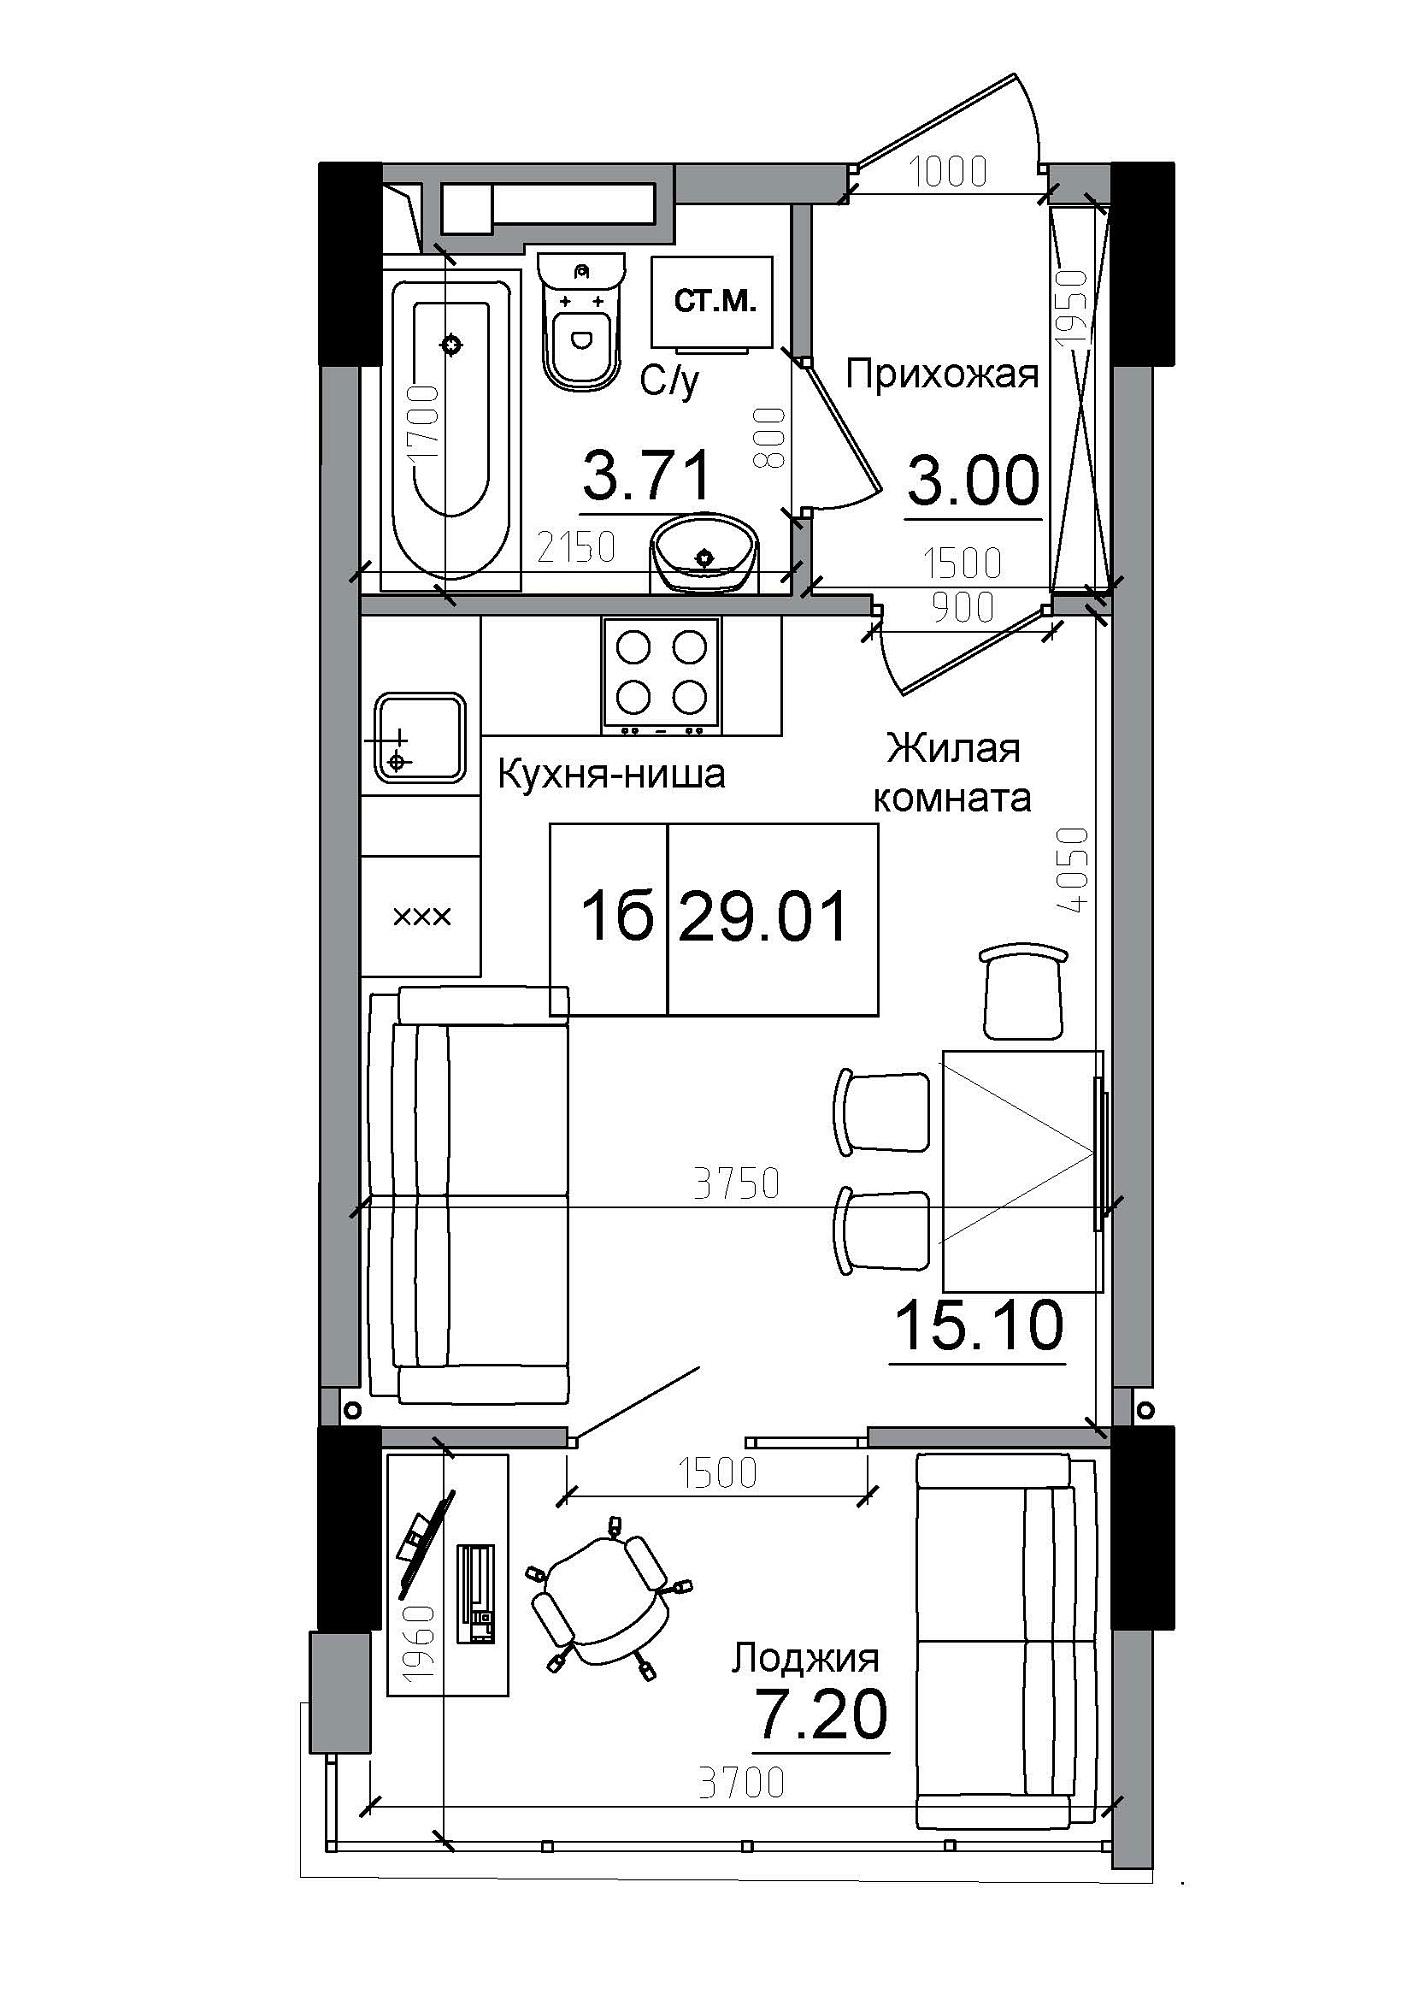 Планировка Smart-квартира площей 29.01м2, AB-12-03/00002.